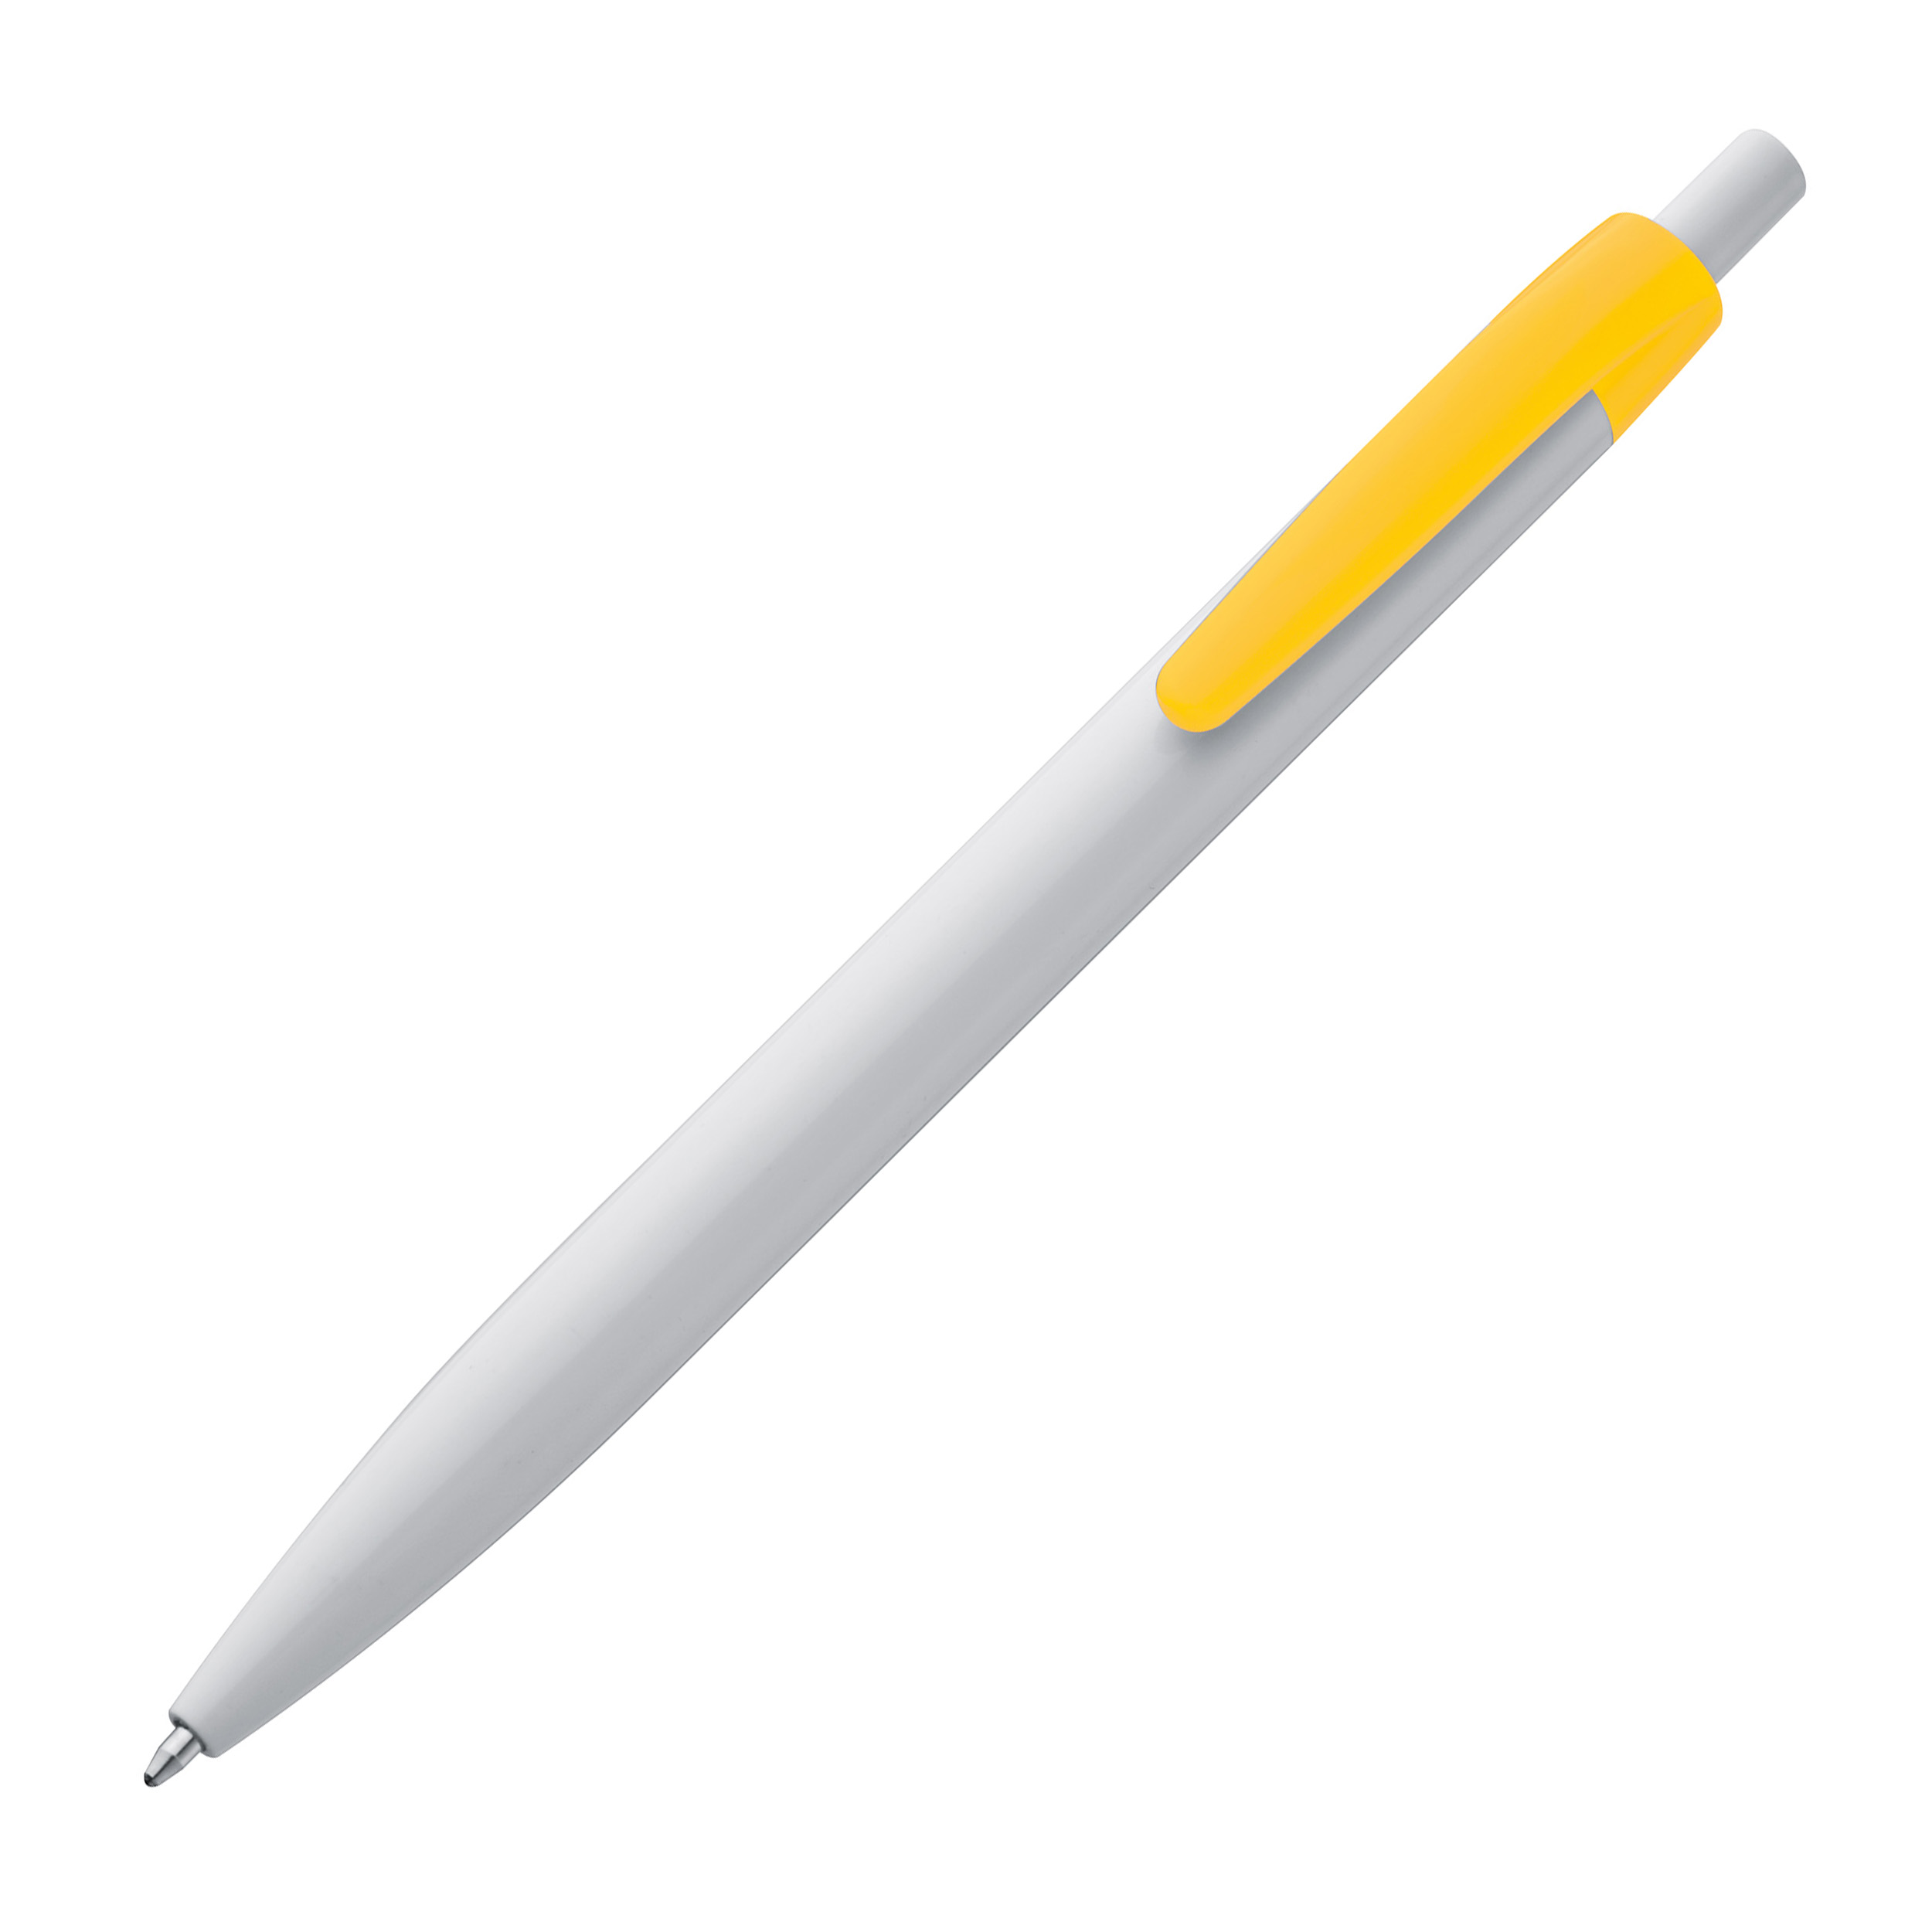 White plastic ball pen with coloured clip